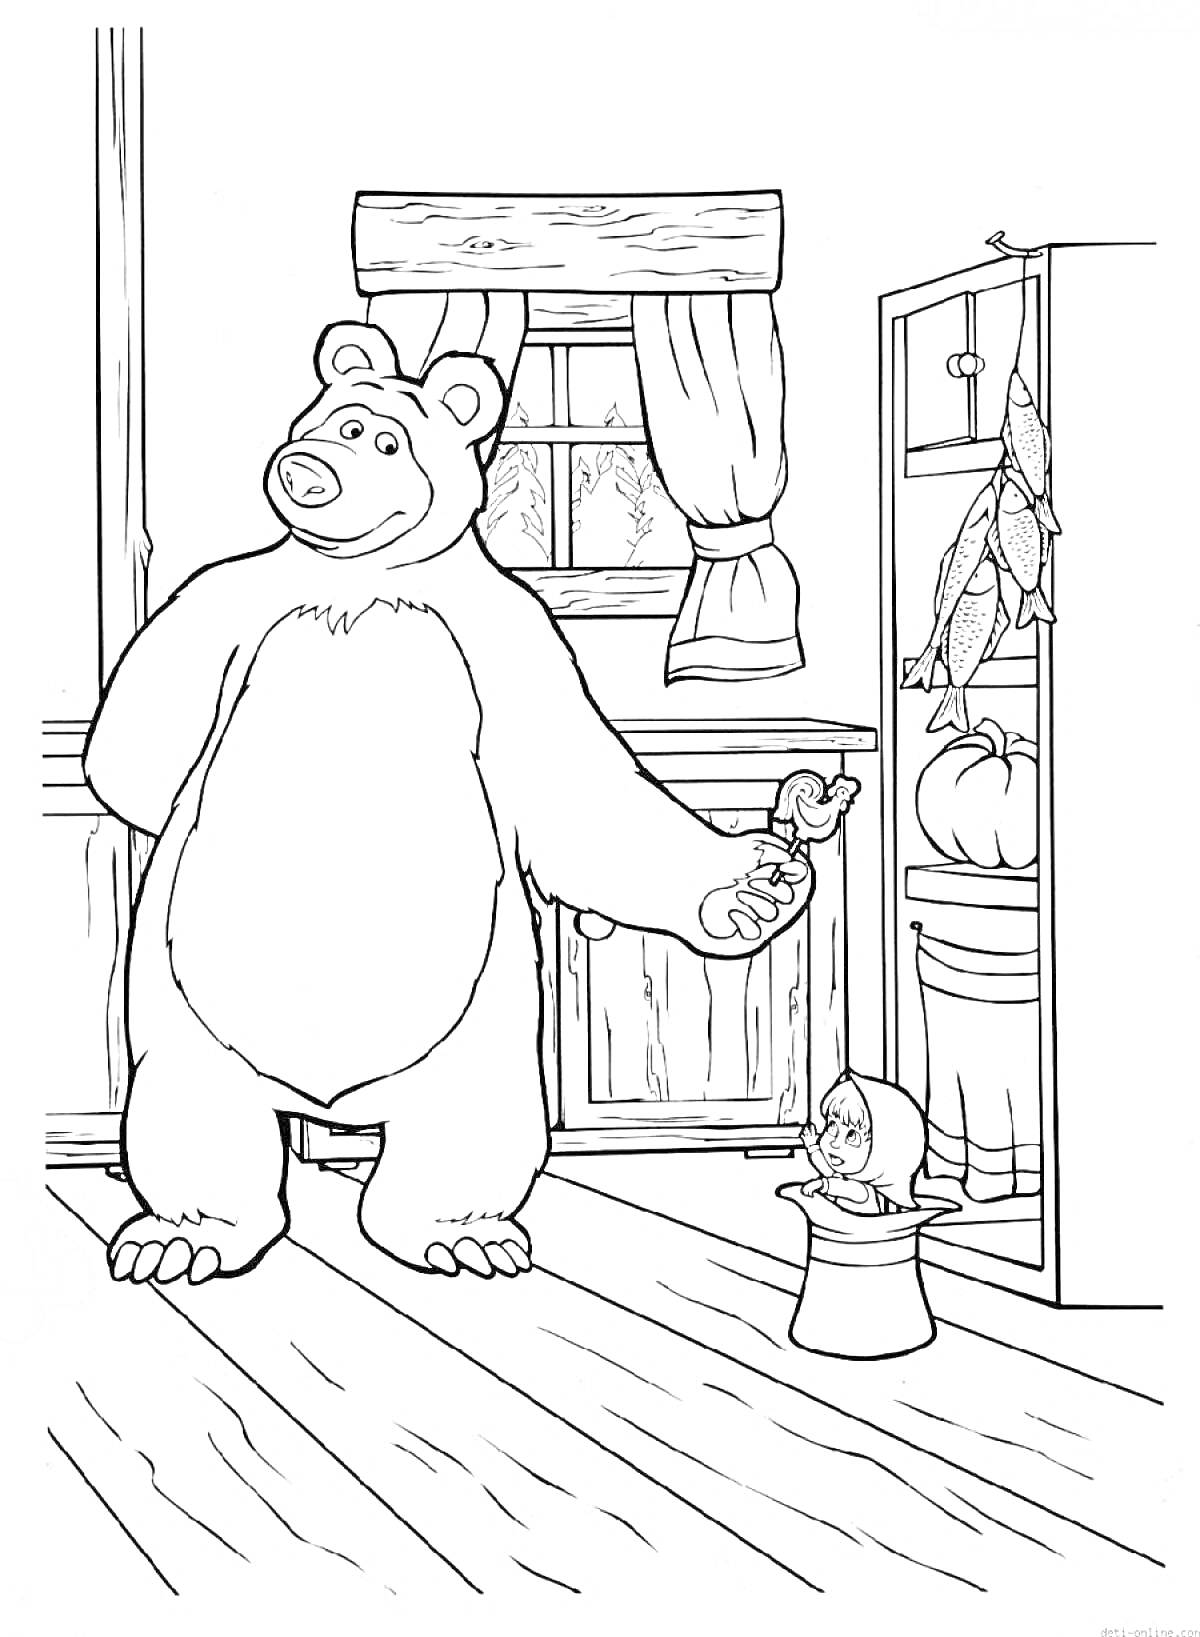 РаскраскаМаша и Медведь на кухне, Медведь с баночкой в руке, Маша сидит на ведре